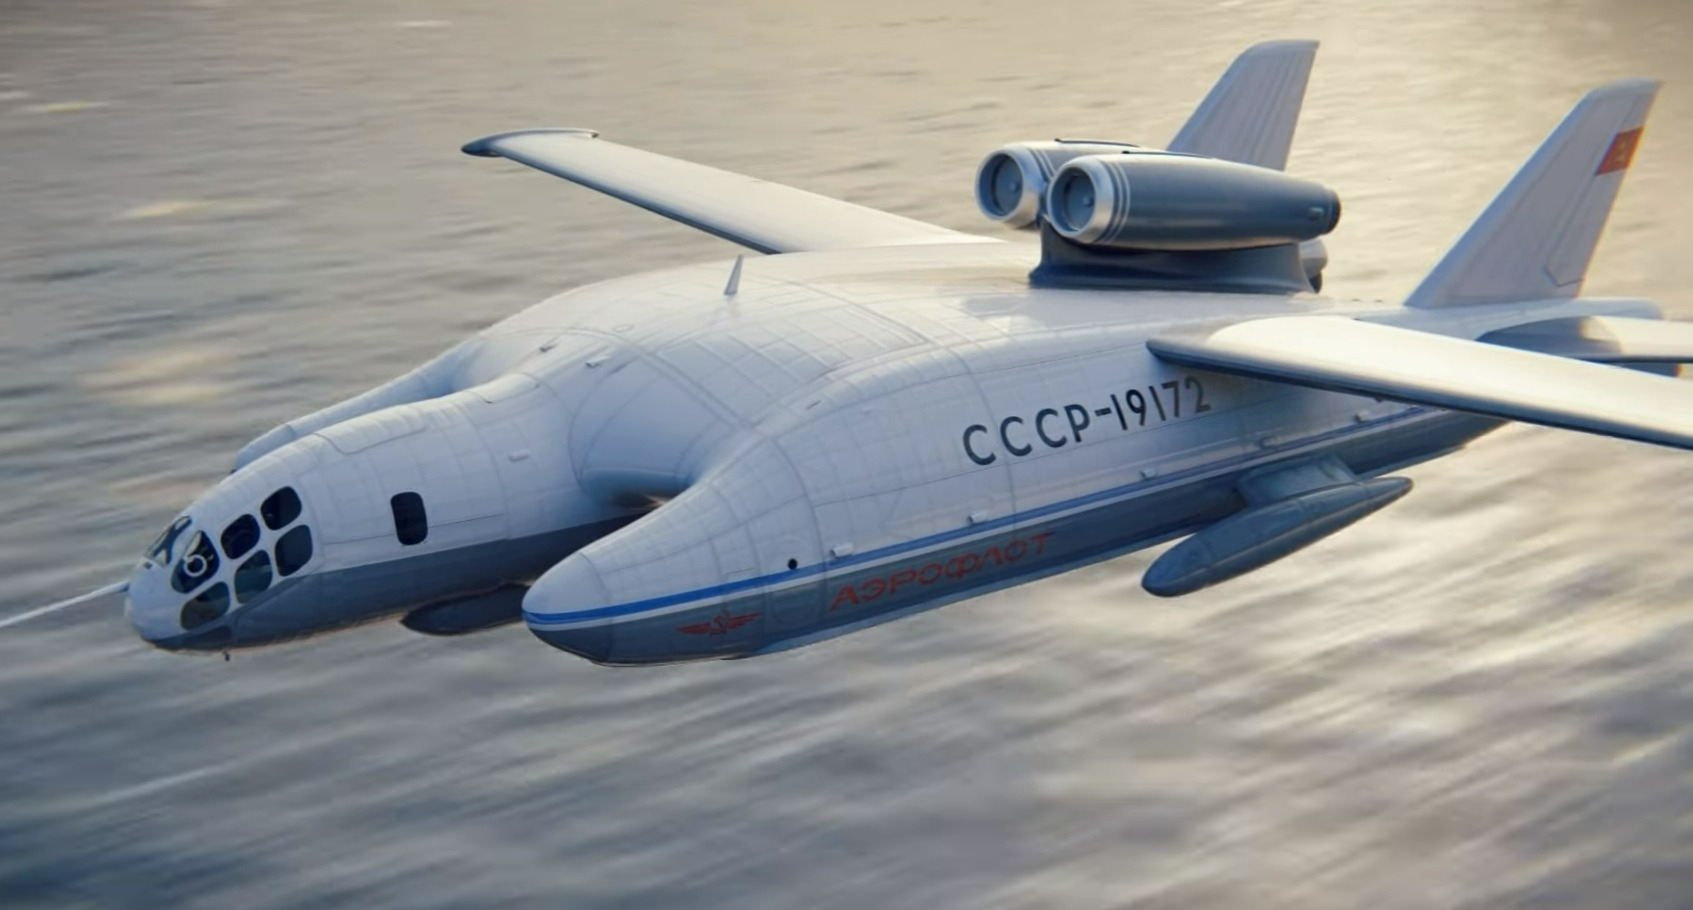 https://s1.cdn.autoevolution.com/images/news/vva-14-ground-effect-aircraft-dreamt-of-dominating-the-world-for-soviet-union-165657_1.jpg